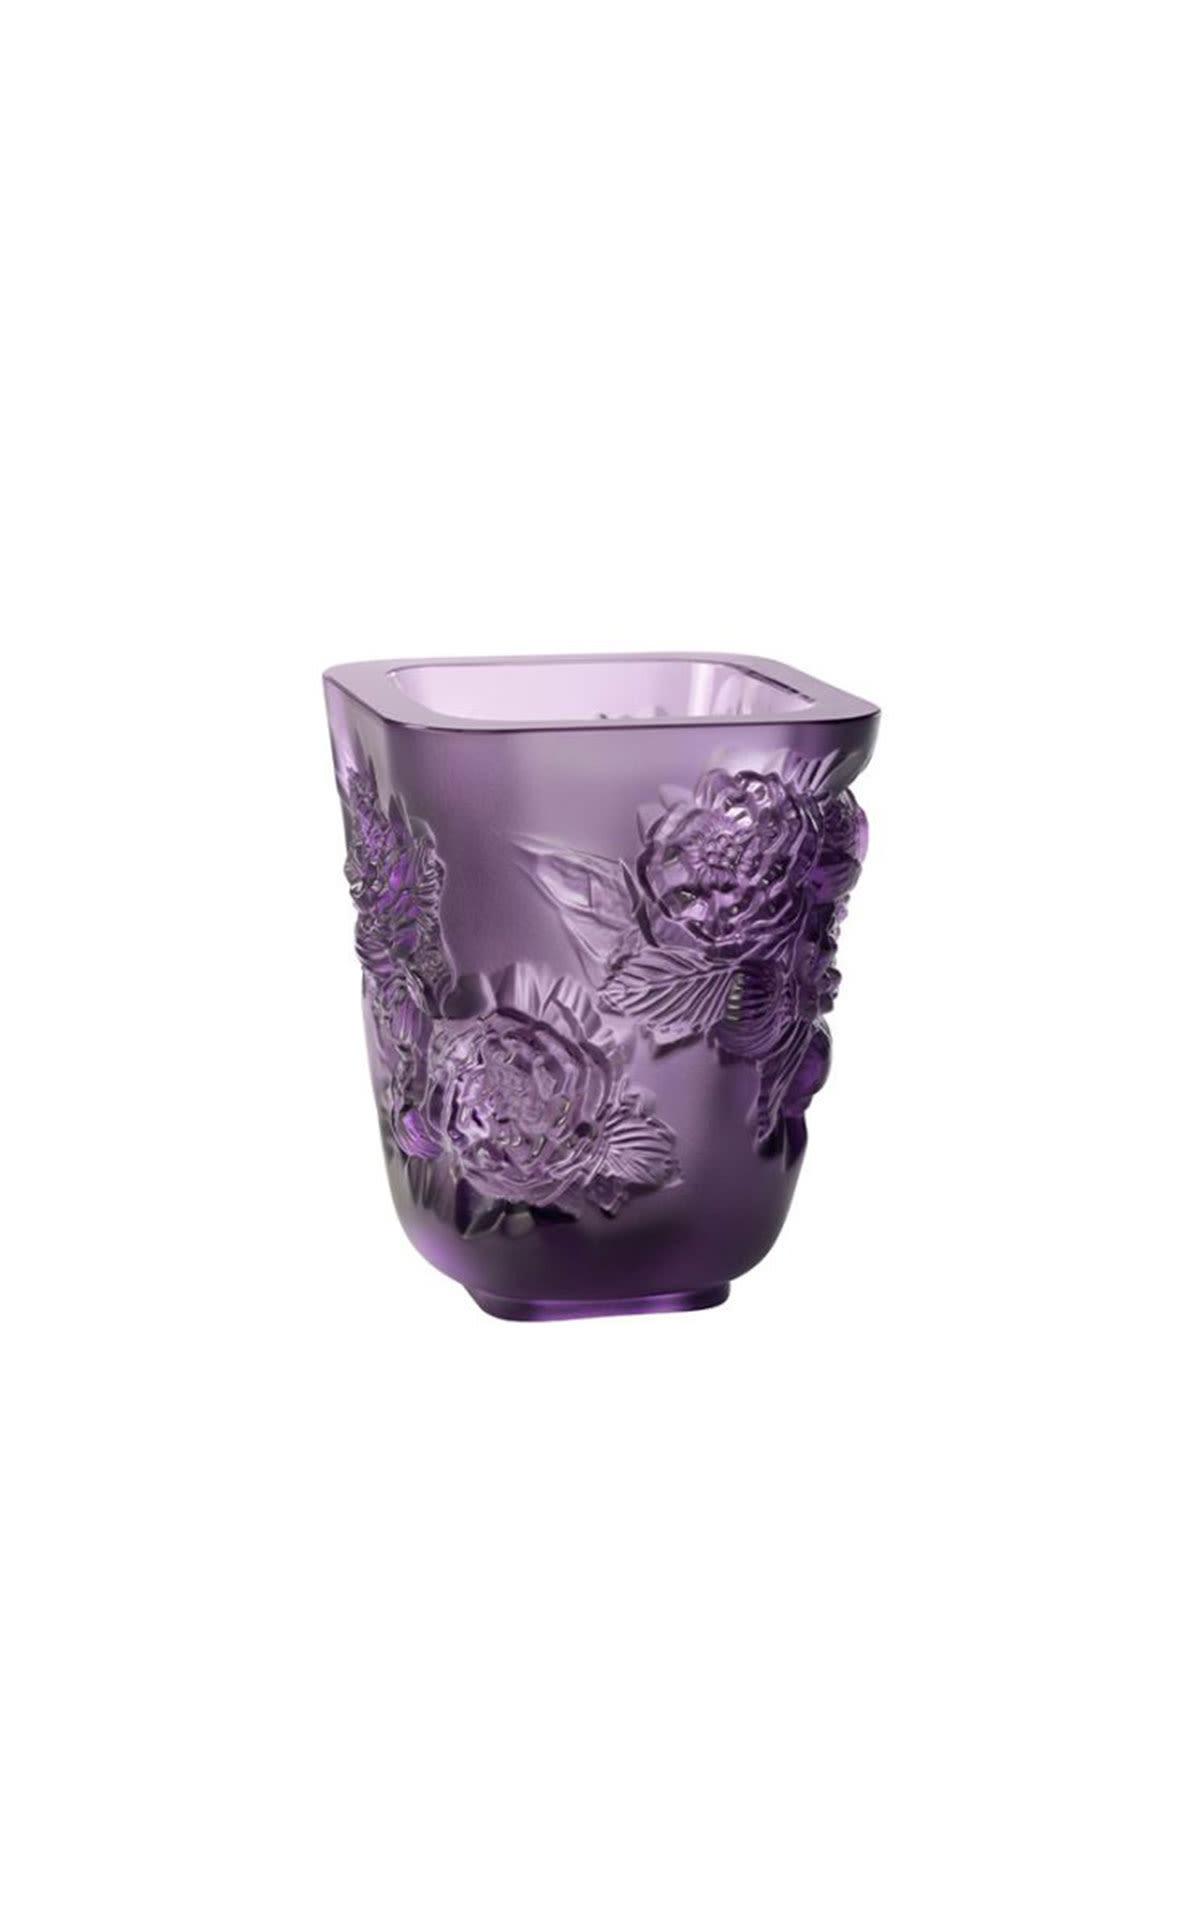 Lalique Vase piviones purple small  from Bicester Village